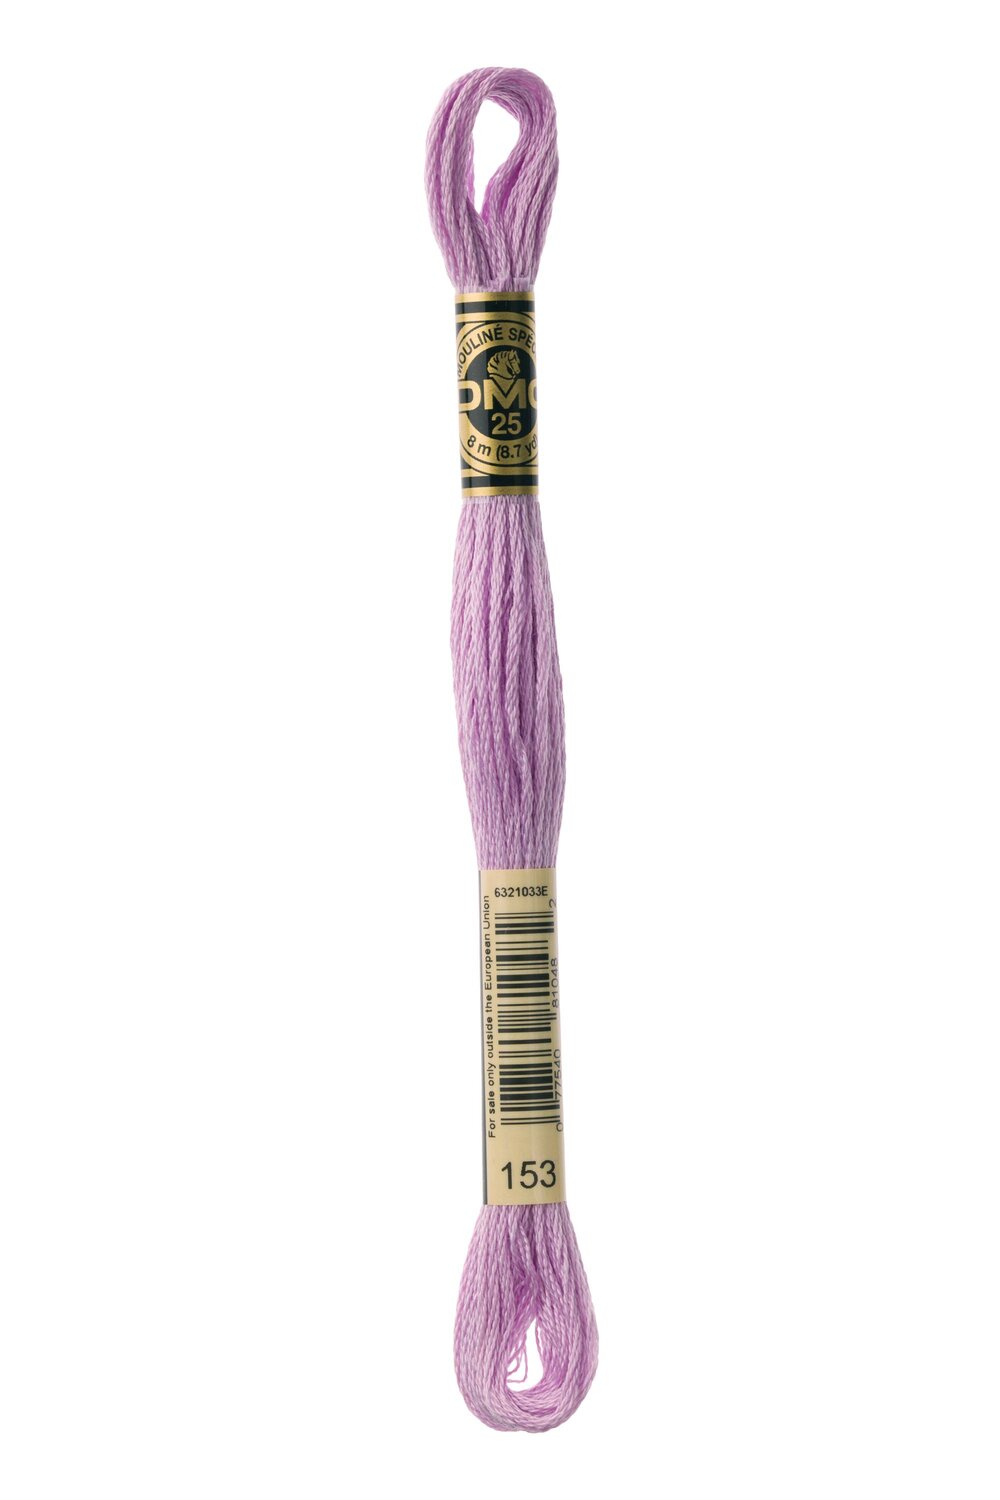 DMC 153 - Lilac - DMC 6 Strand Embroidery Thread, Thread & Floss, Thread & Floss, The Crafty Grimalkin - A Cross Stitch Store